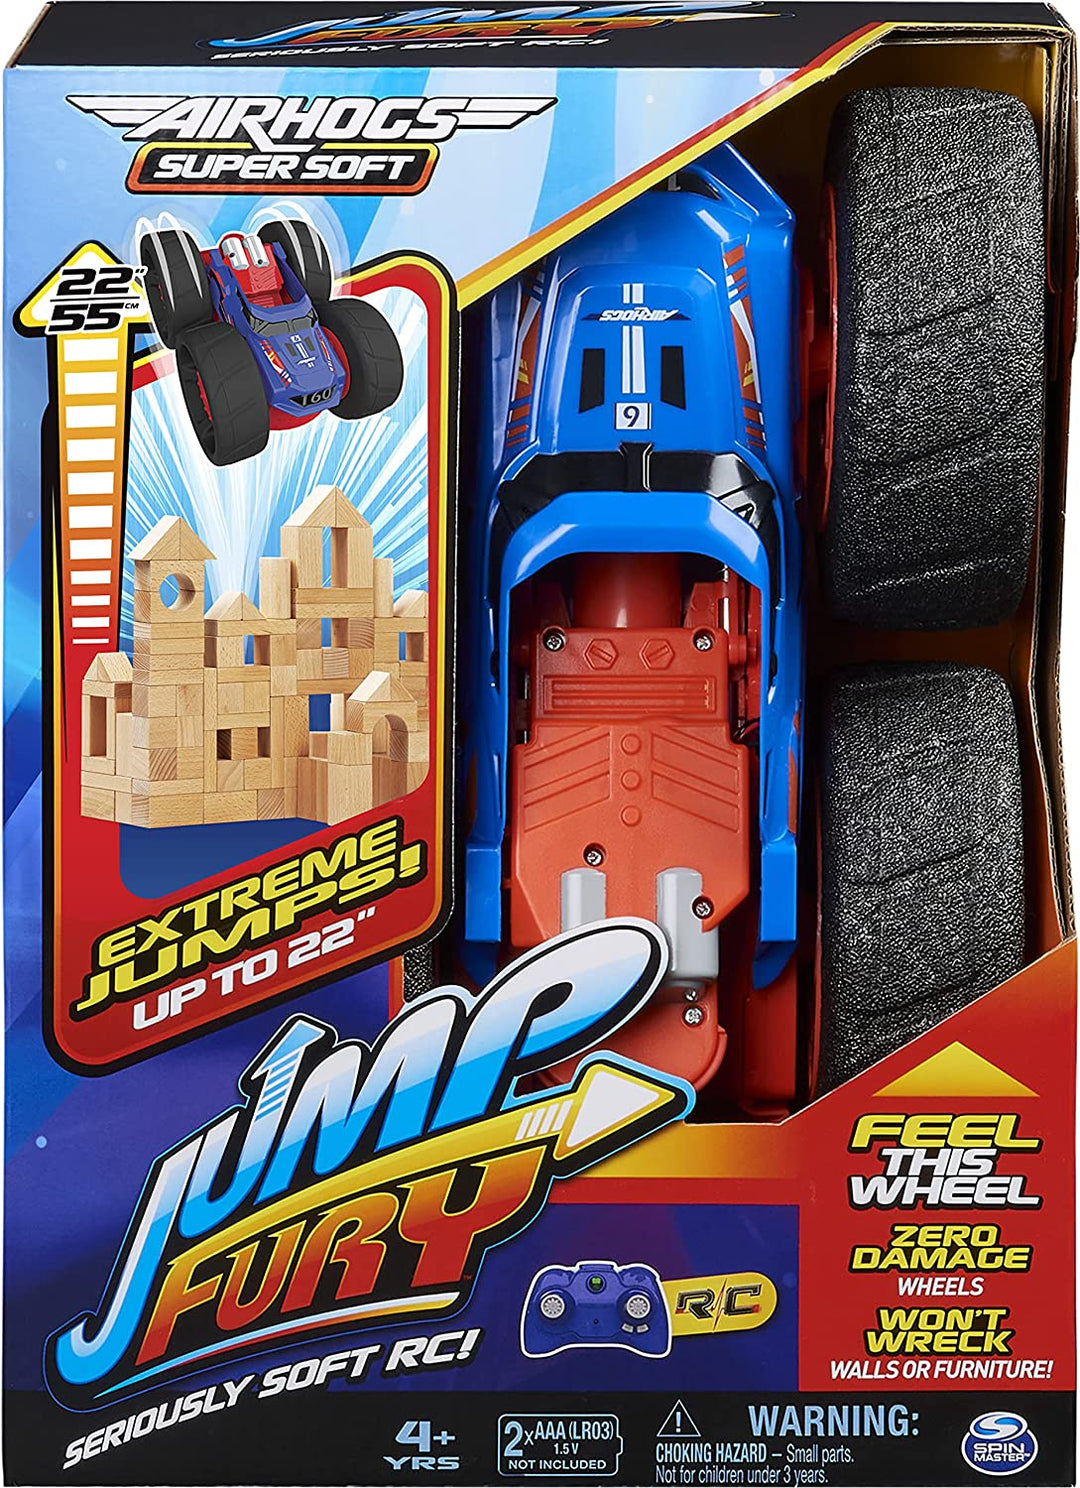 Air Hogs Super Soft, Jump Fury met schadevrije wielen, Extreem springende auto met afstandsbediening, kinderspeelgoed